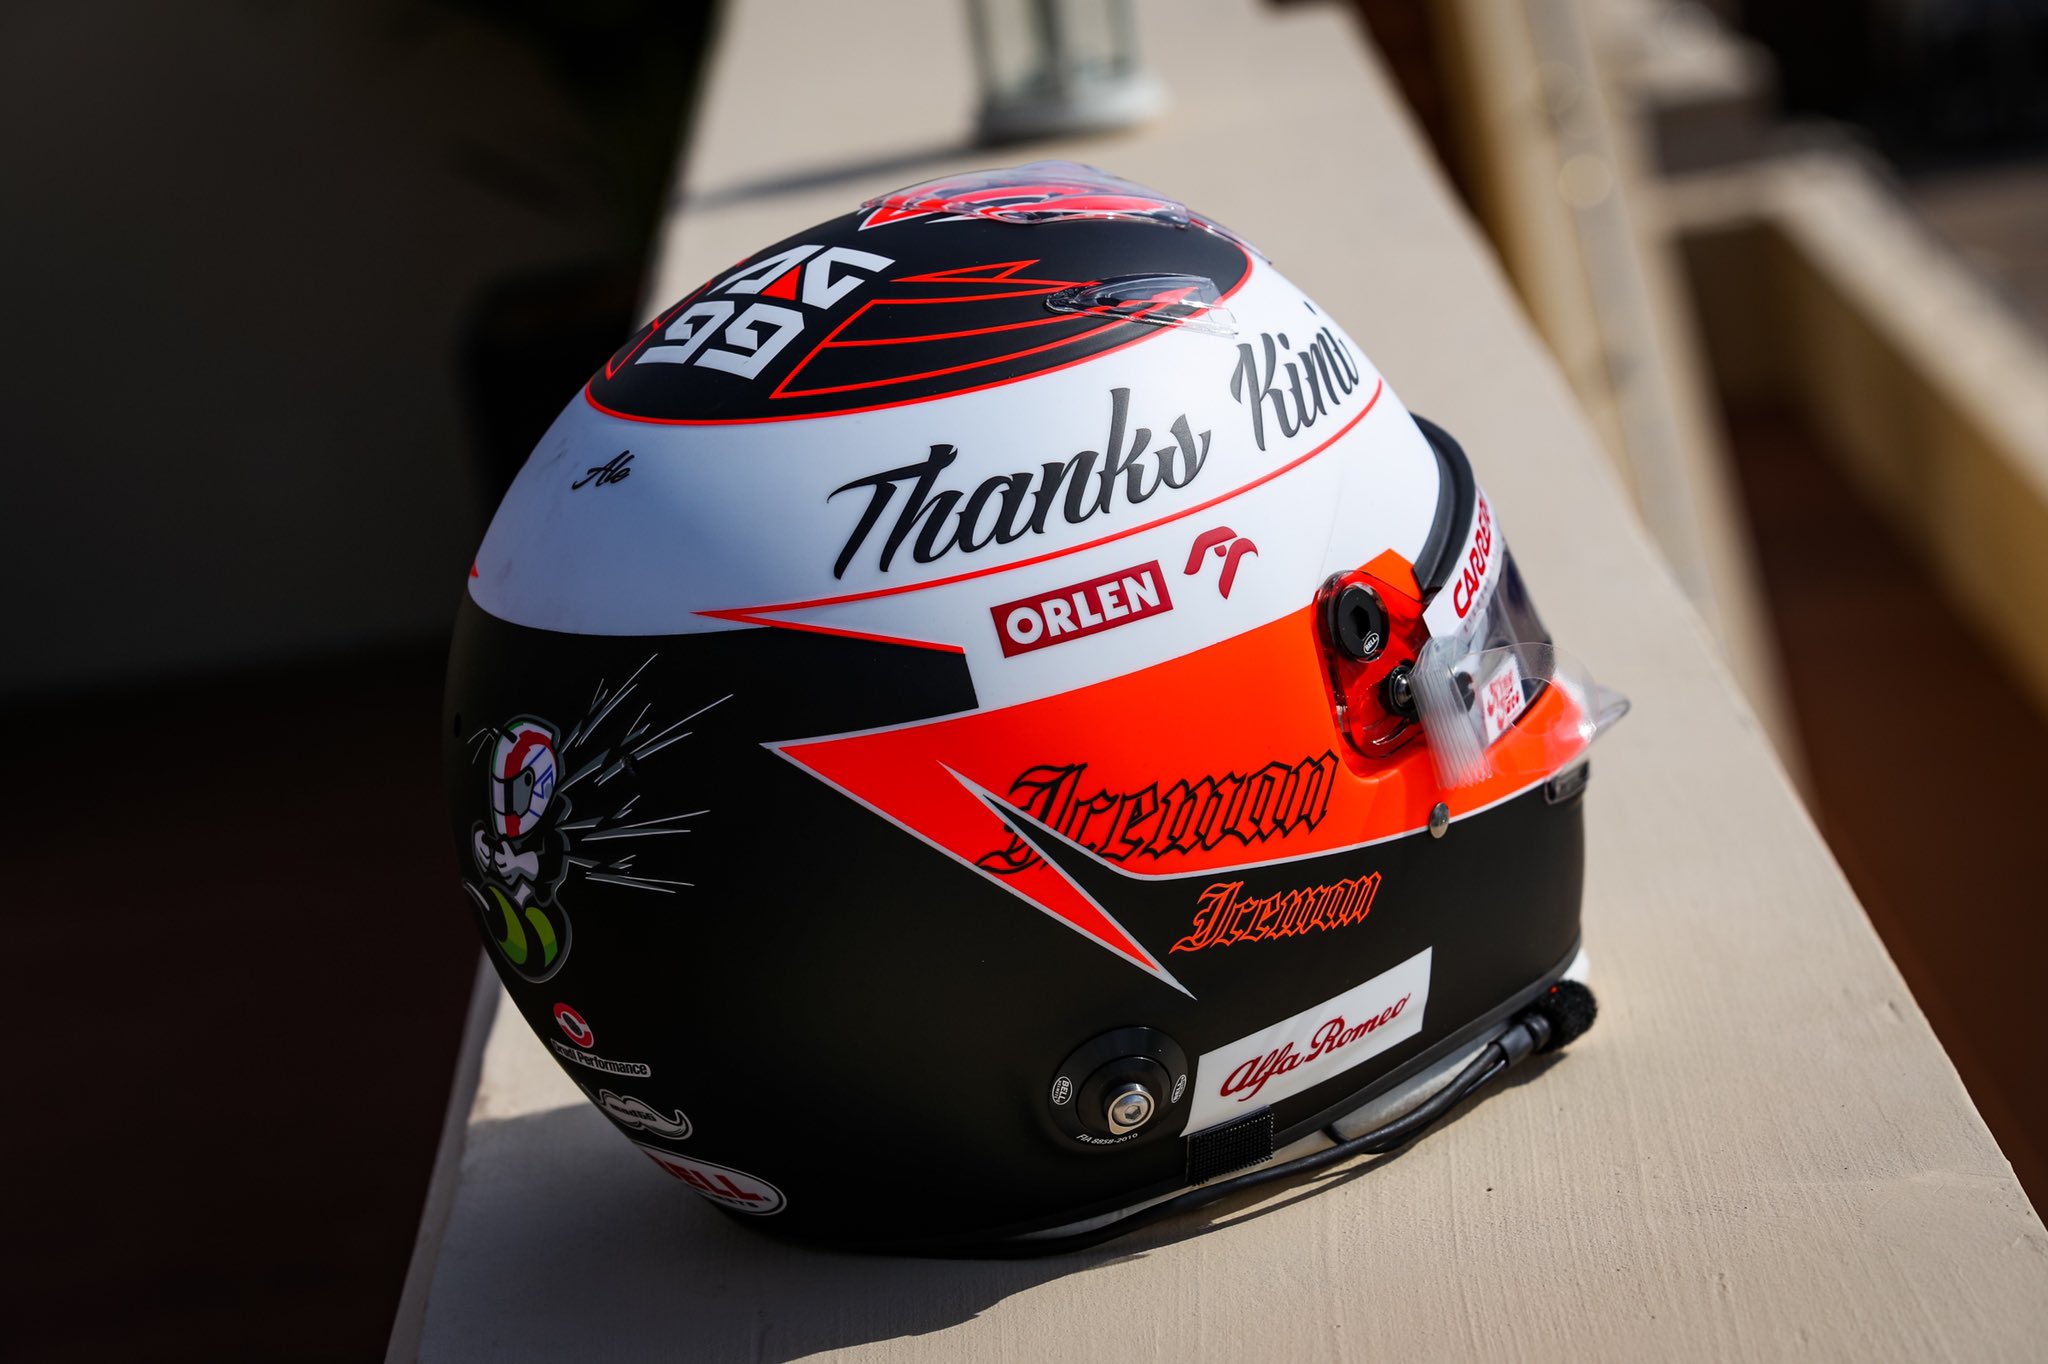 Antonio Giovinazzi's 2021 Abu Dhabi Grand Prix helmet